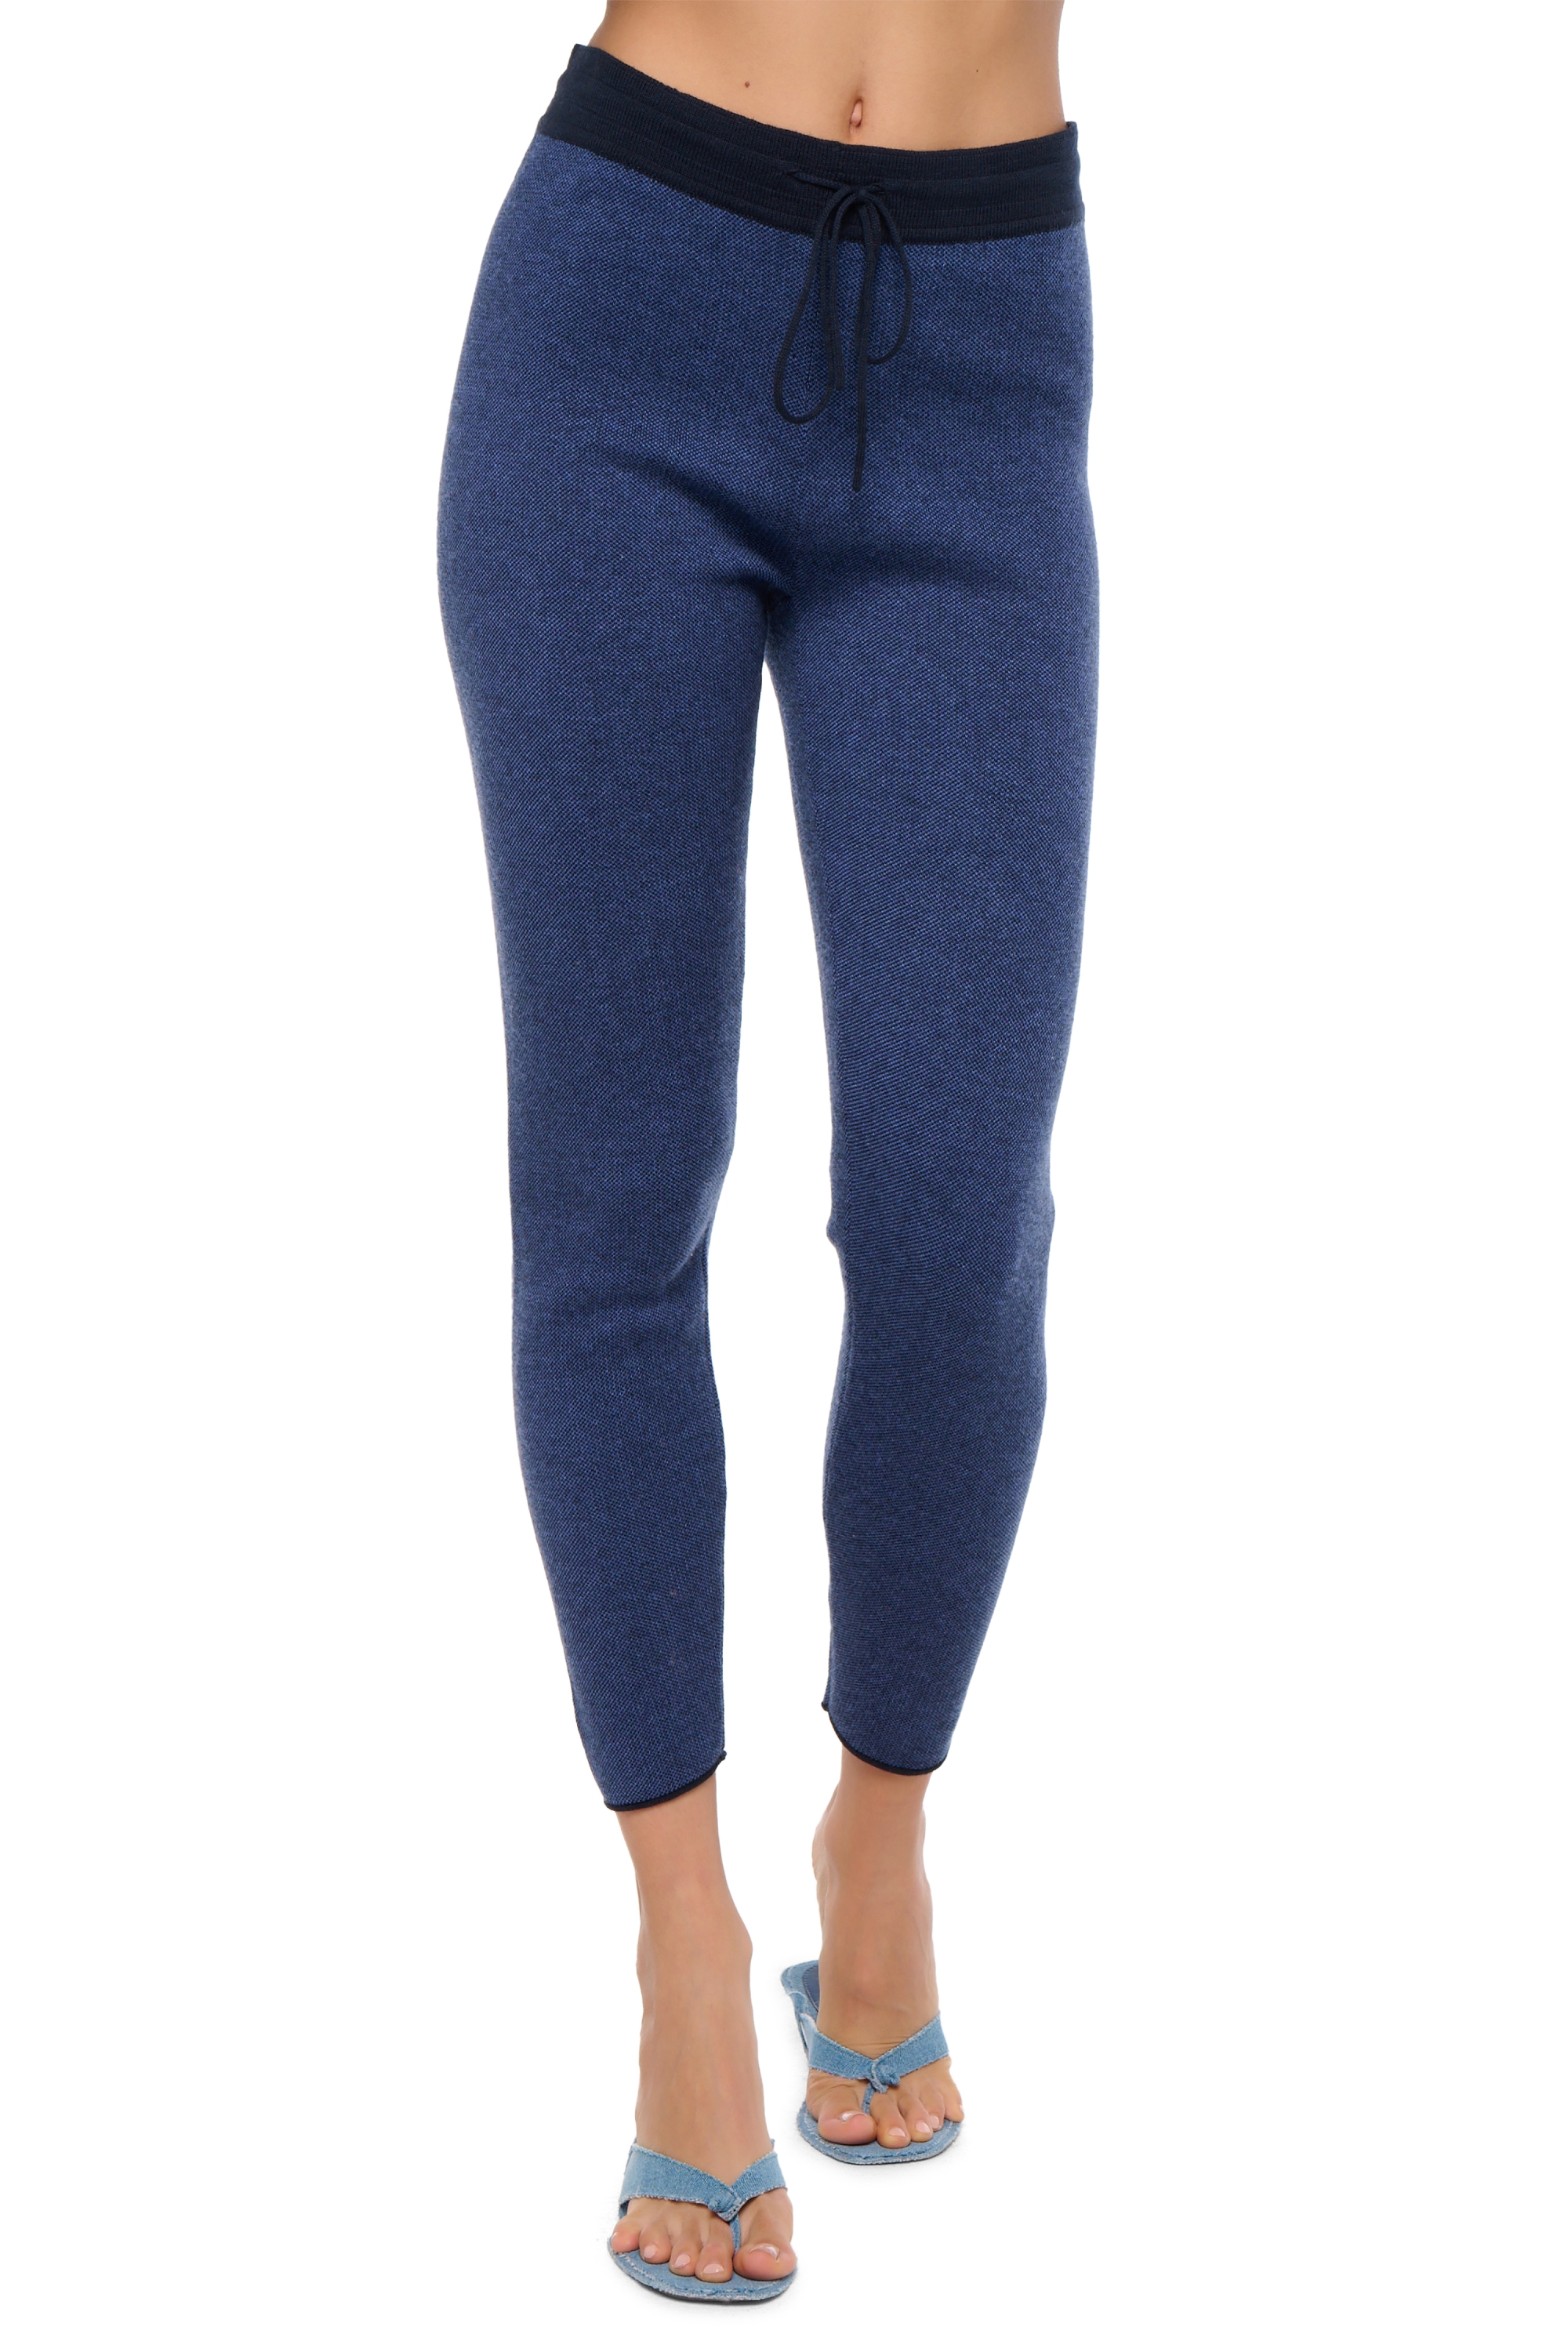 Cotone & Cashmere cashmere donna pantaloni leggings shiloh blue s